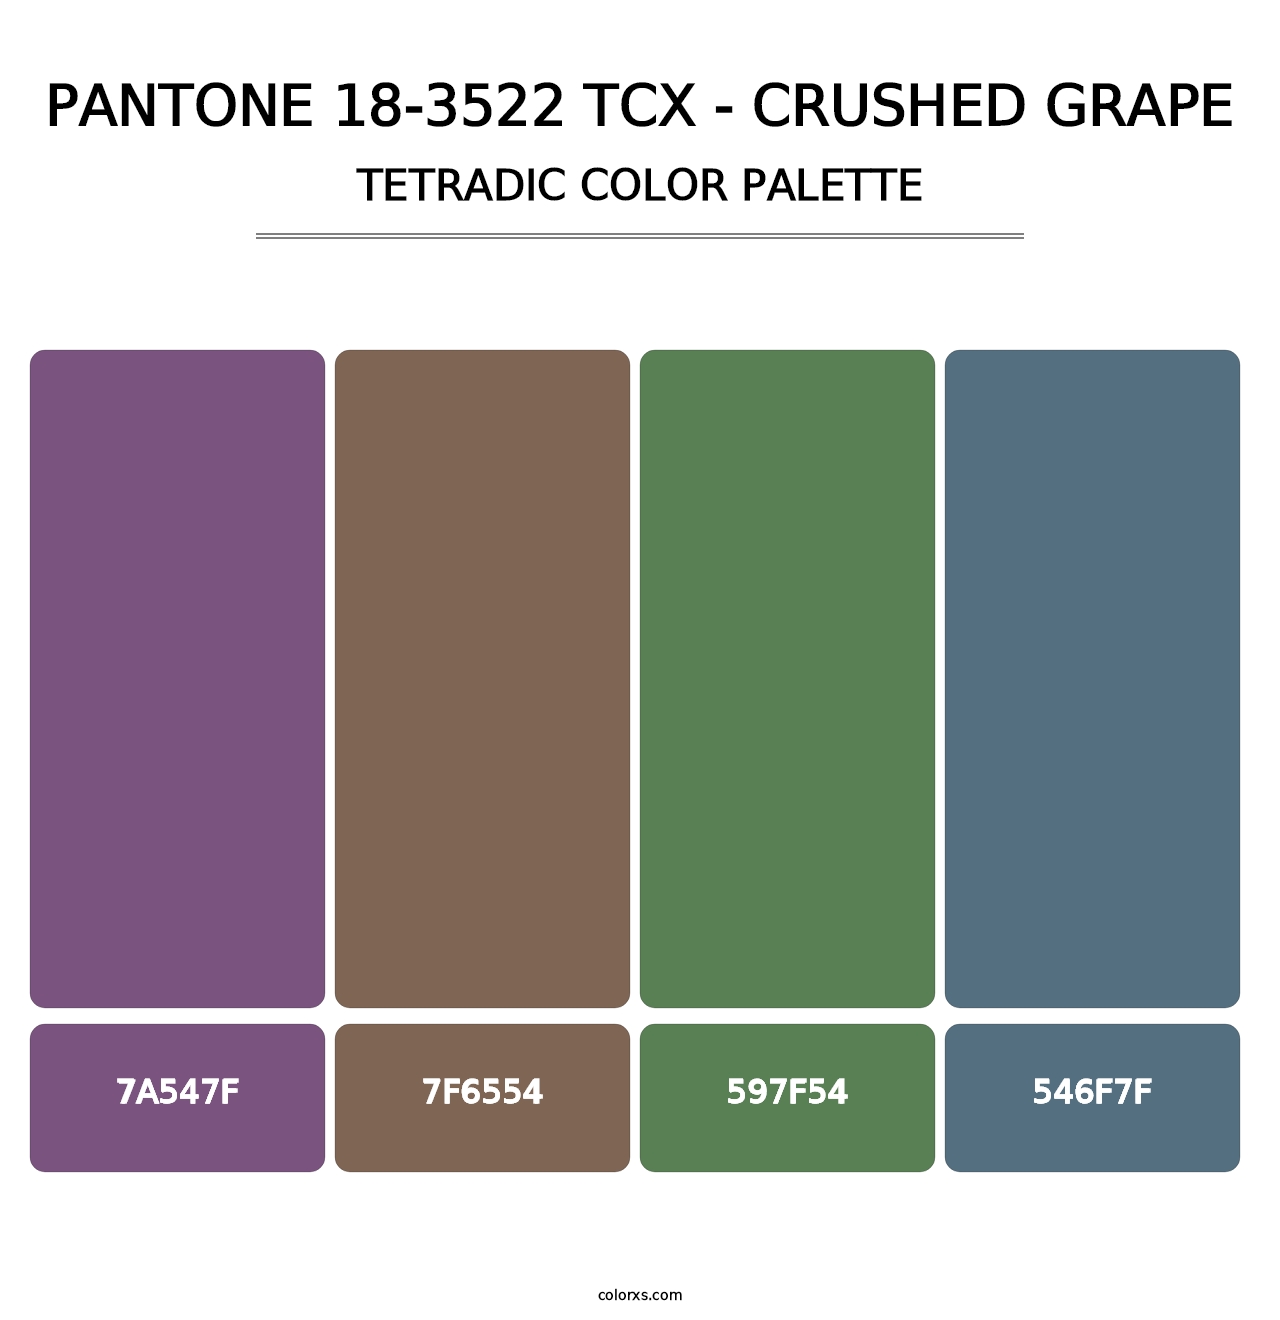 PANTONE 18-3522 TCX - Crushed Grape - Tetradic Color Palette